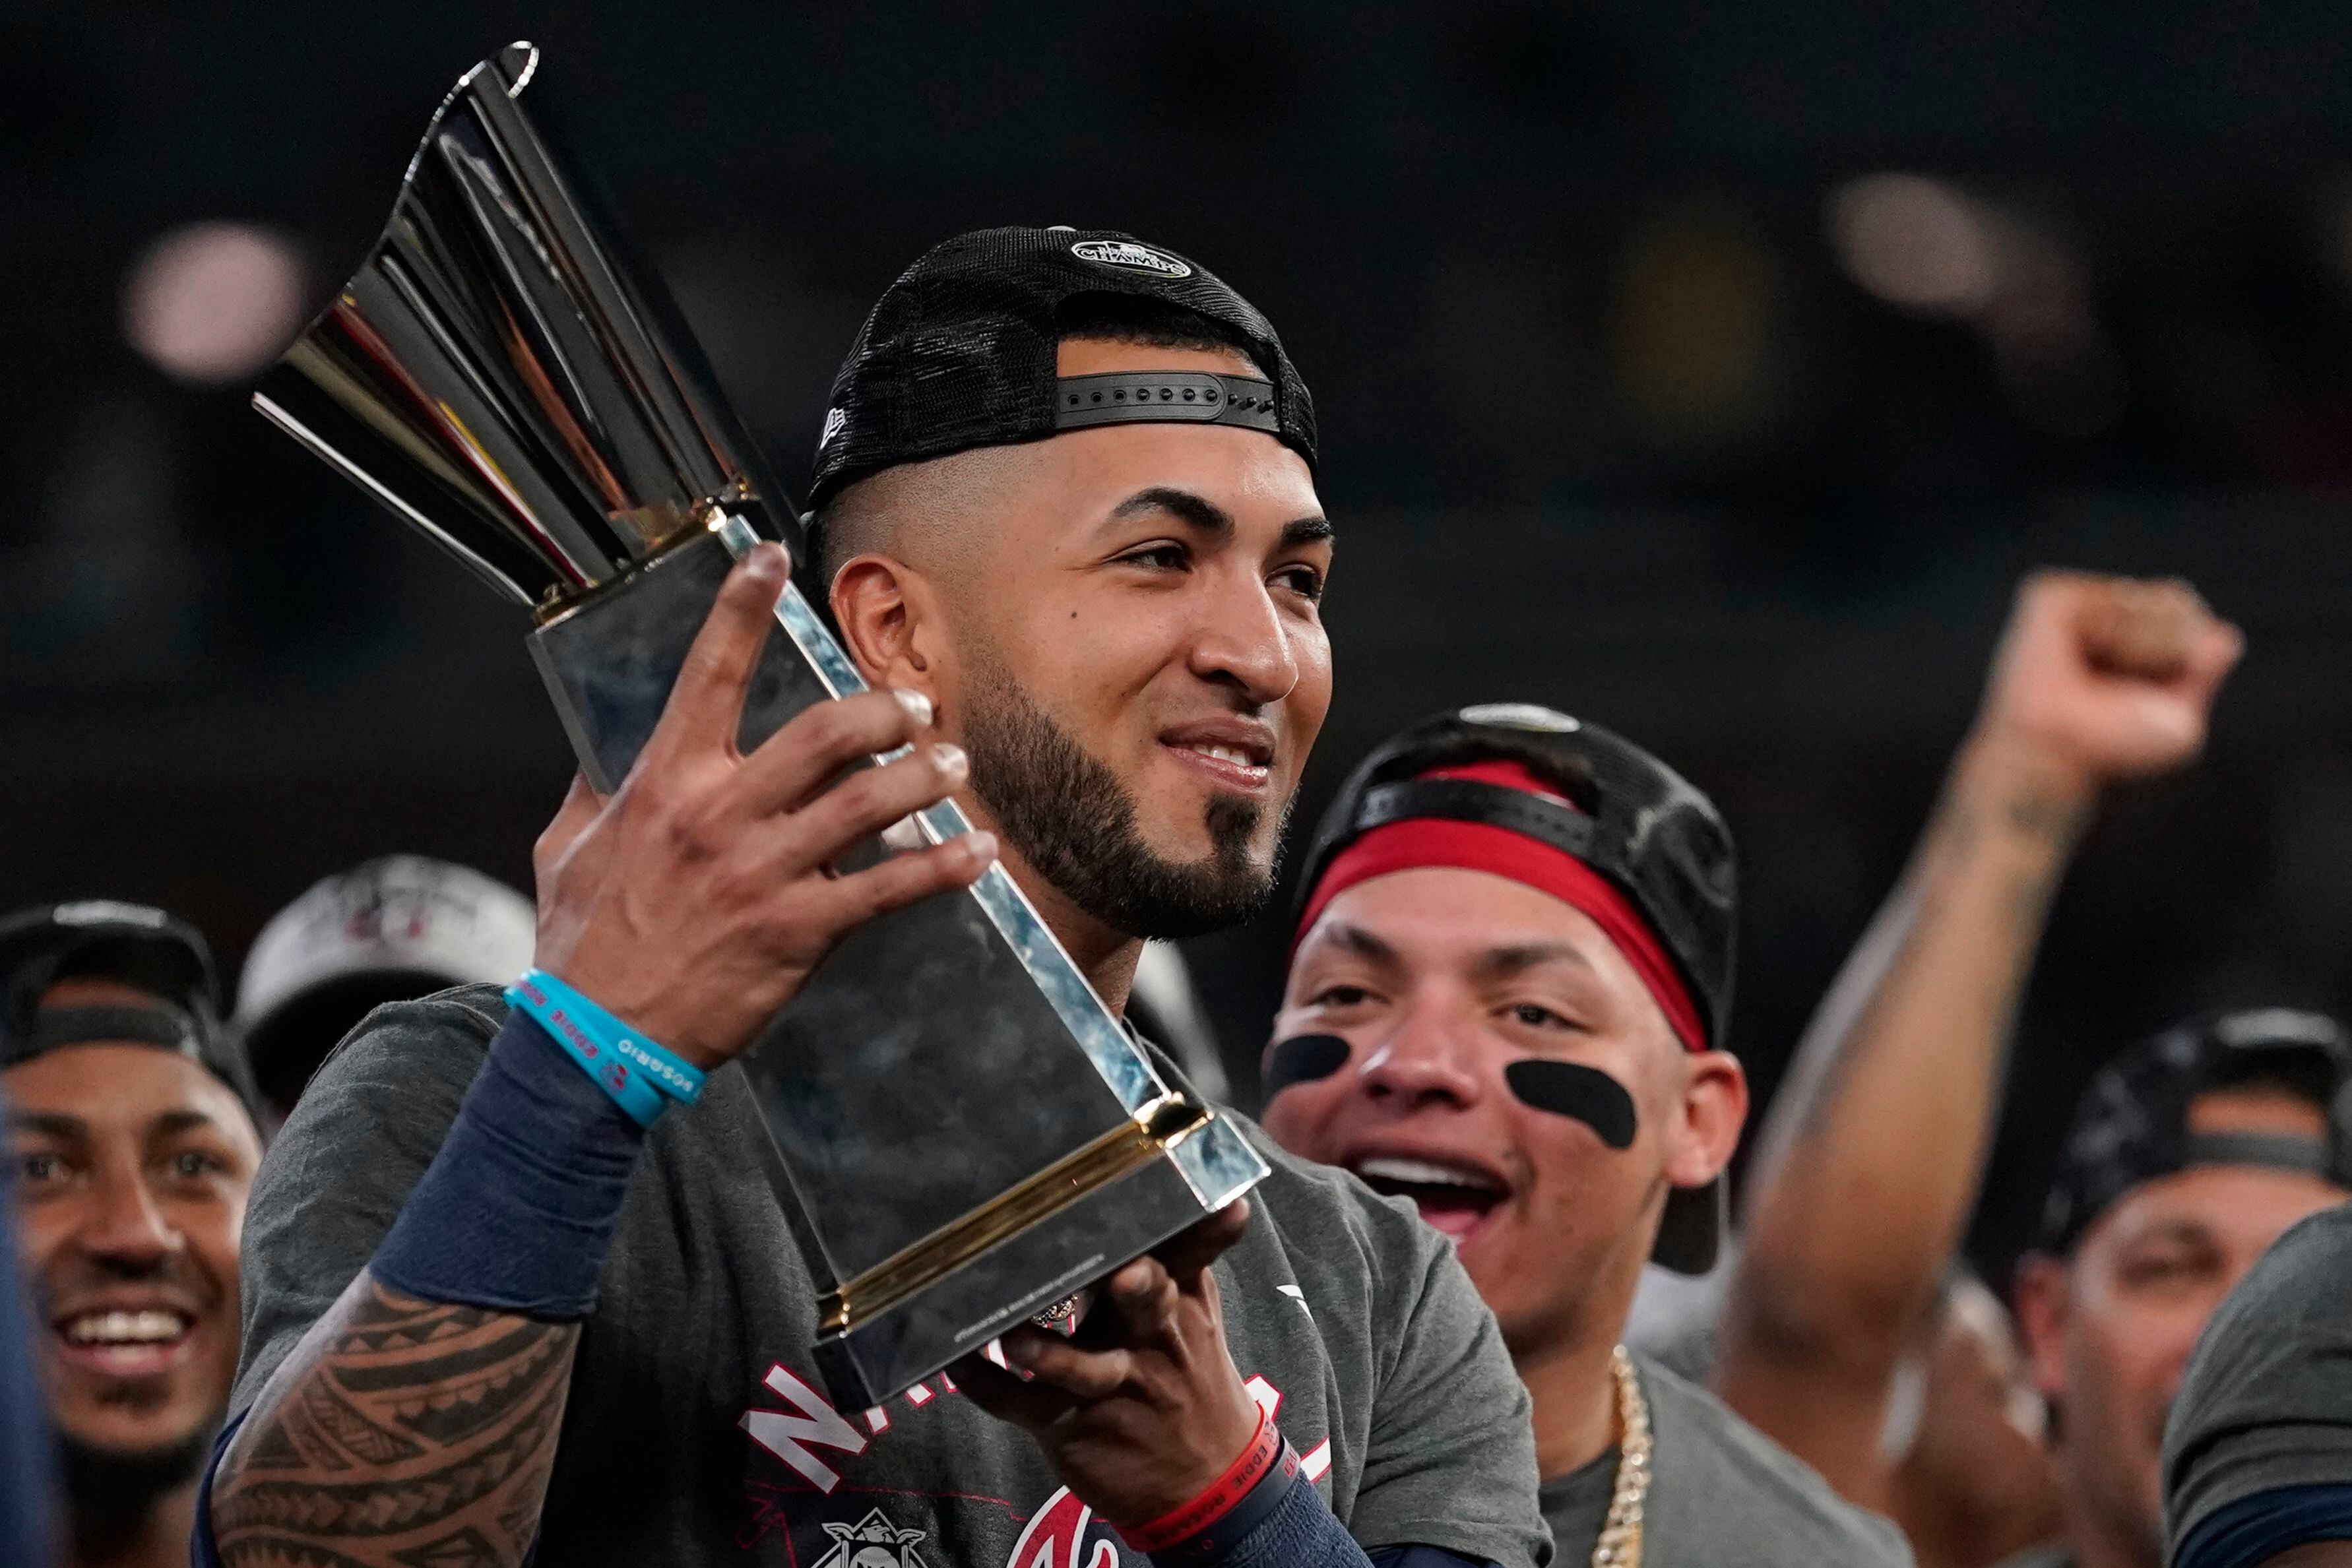 2021 MLB playoffs - NLCS MVP Eddie Rosario helps send Braves to